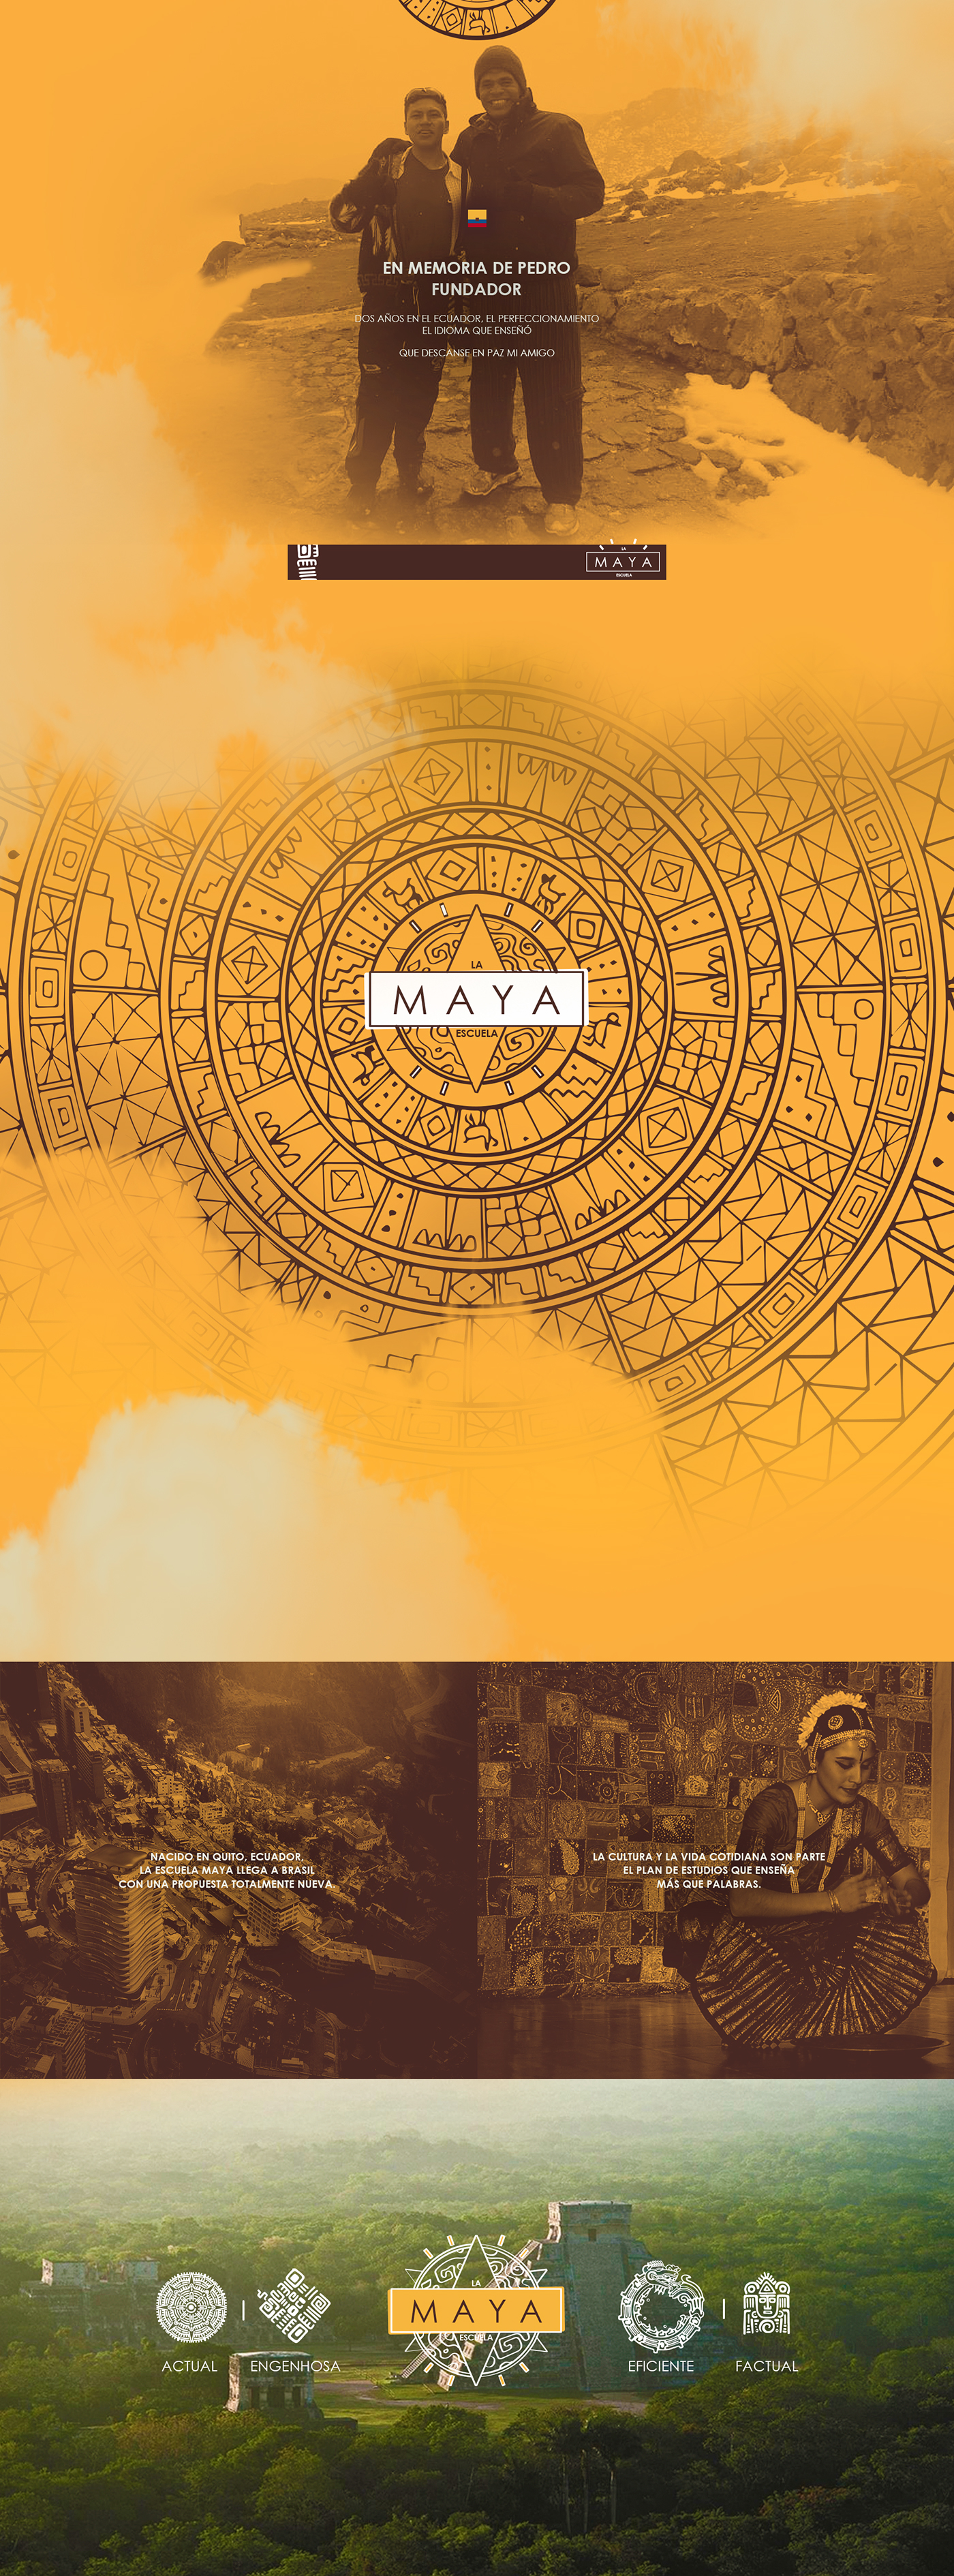 Maya mayan escuela idioma espenhol escola logo creative